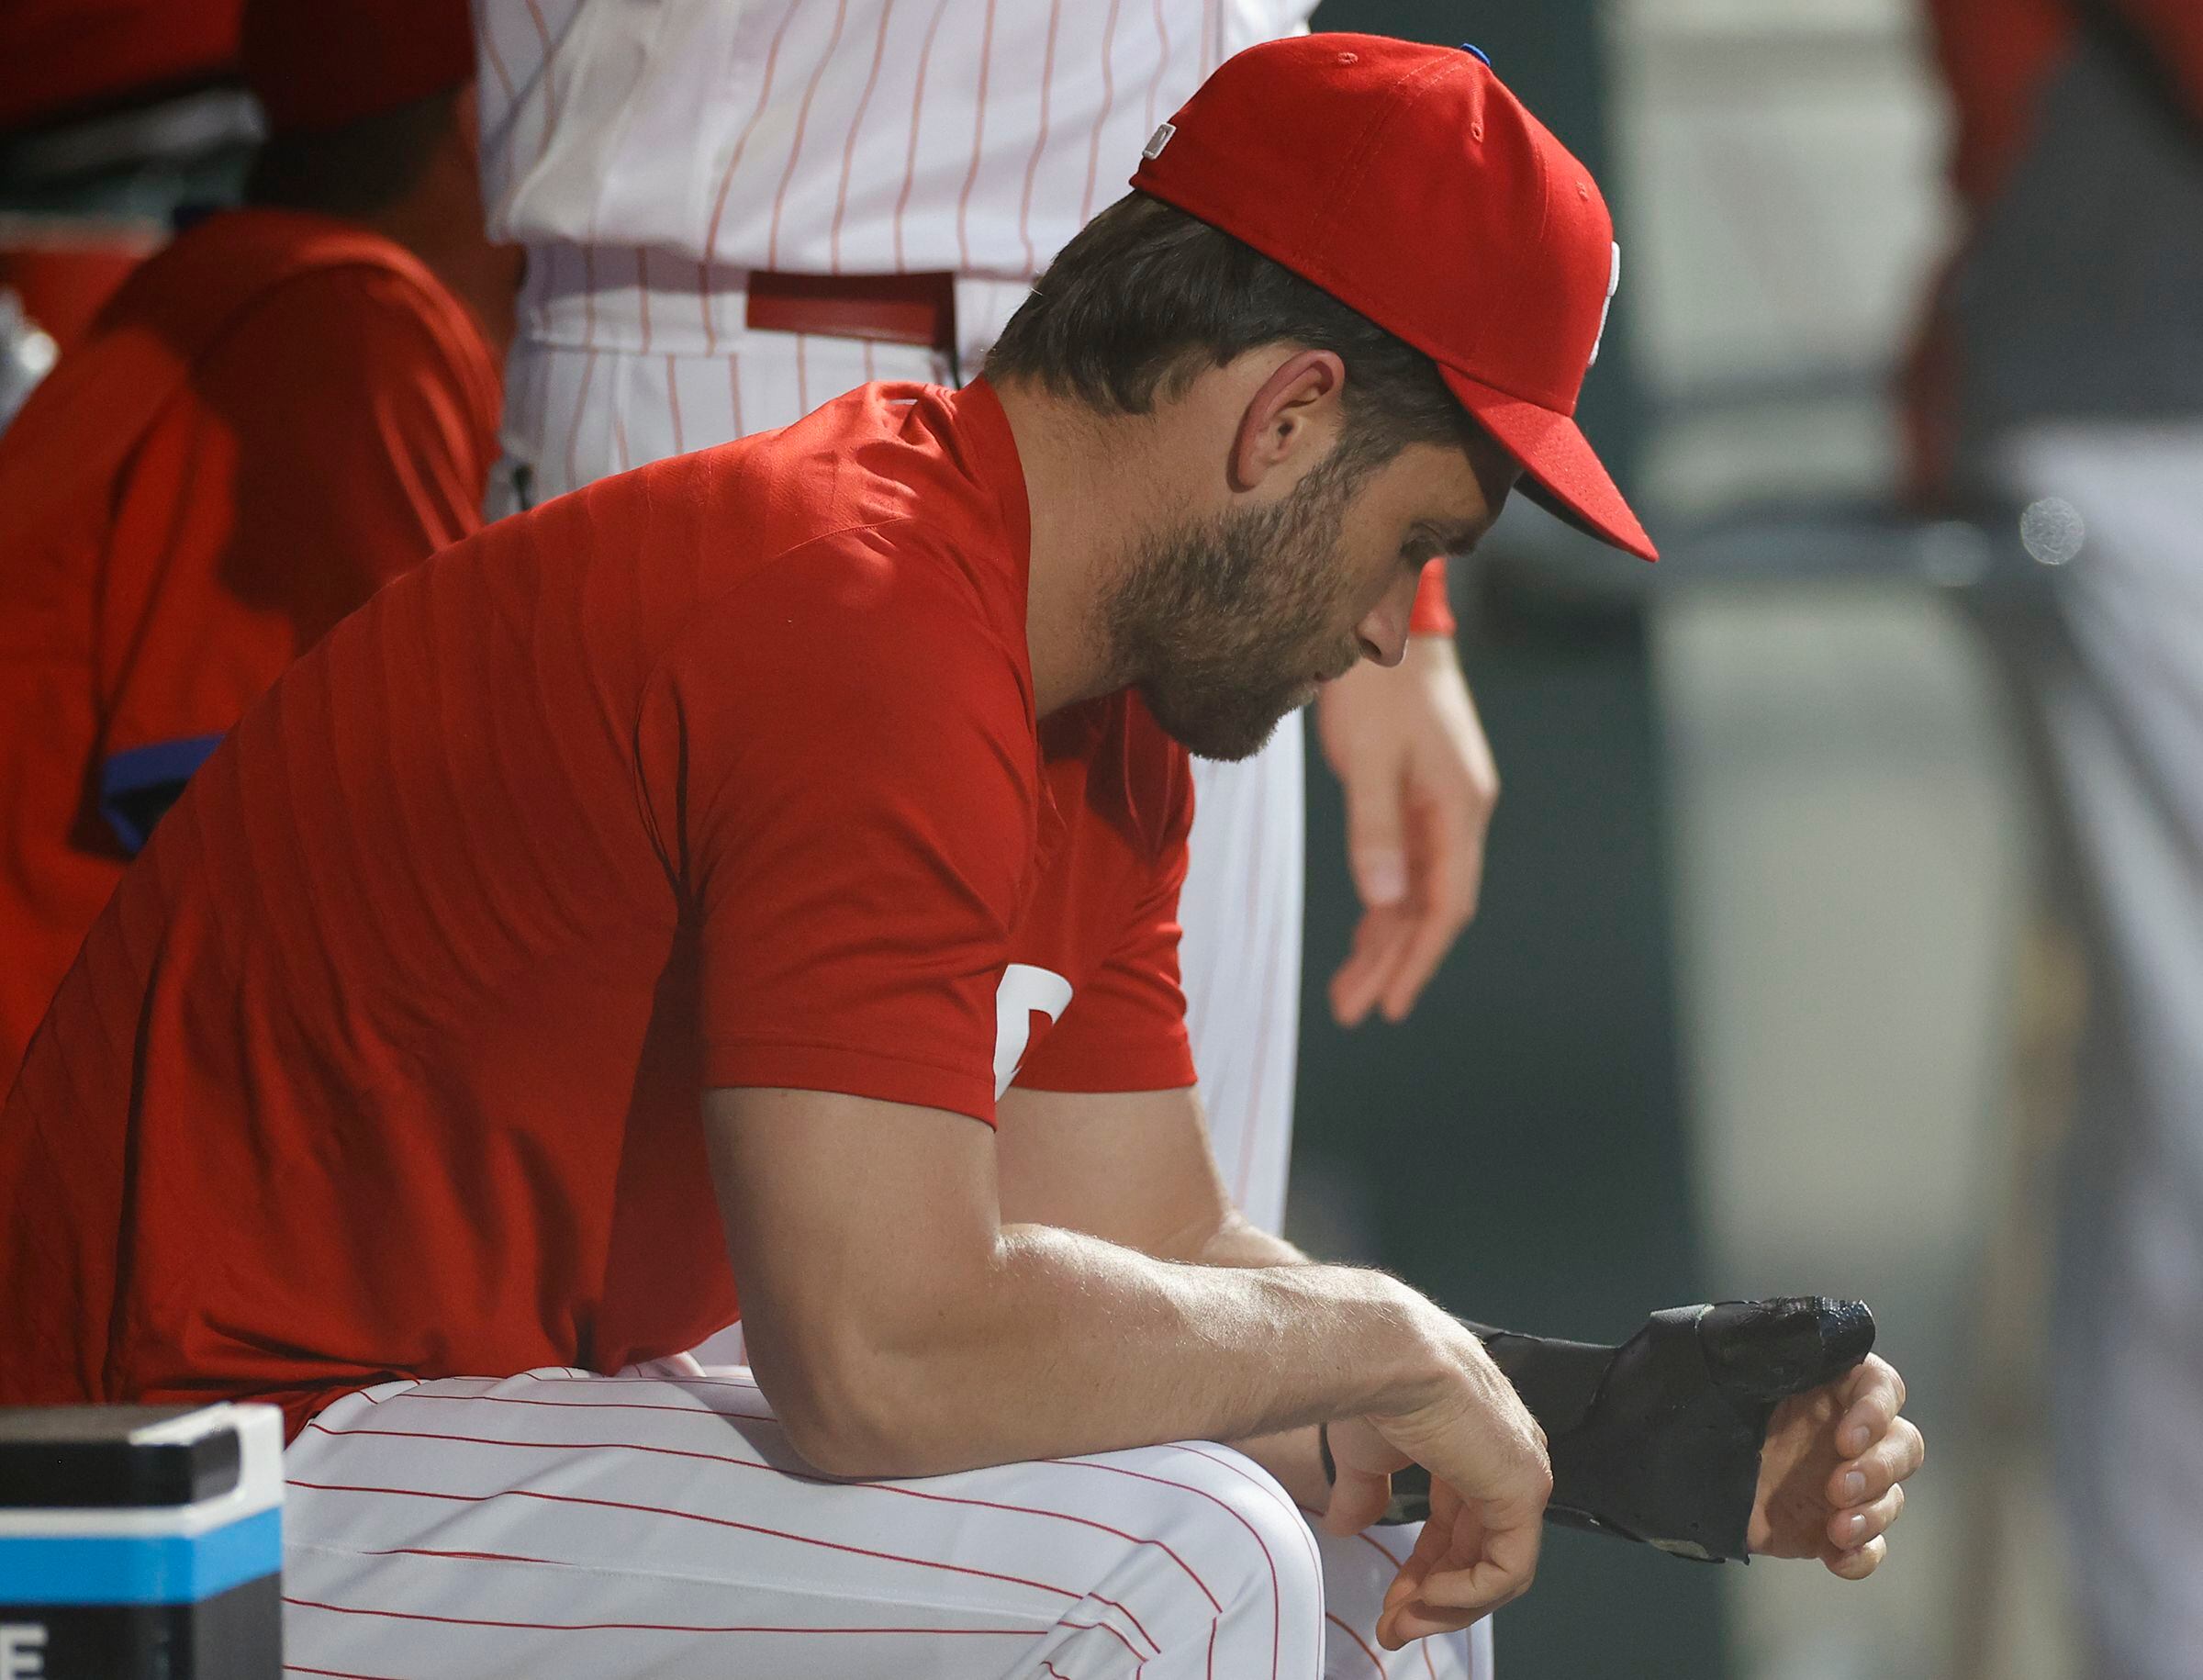 Phillies' Bryce Harper will have elbow surgery next week